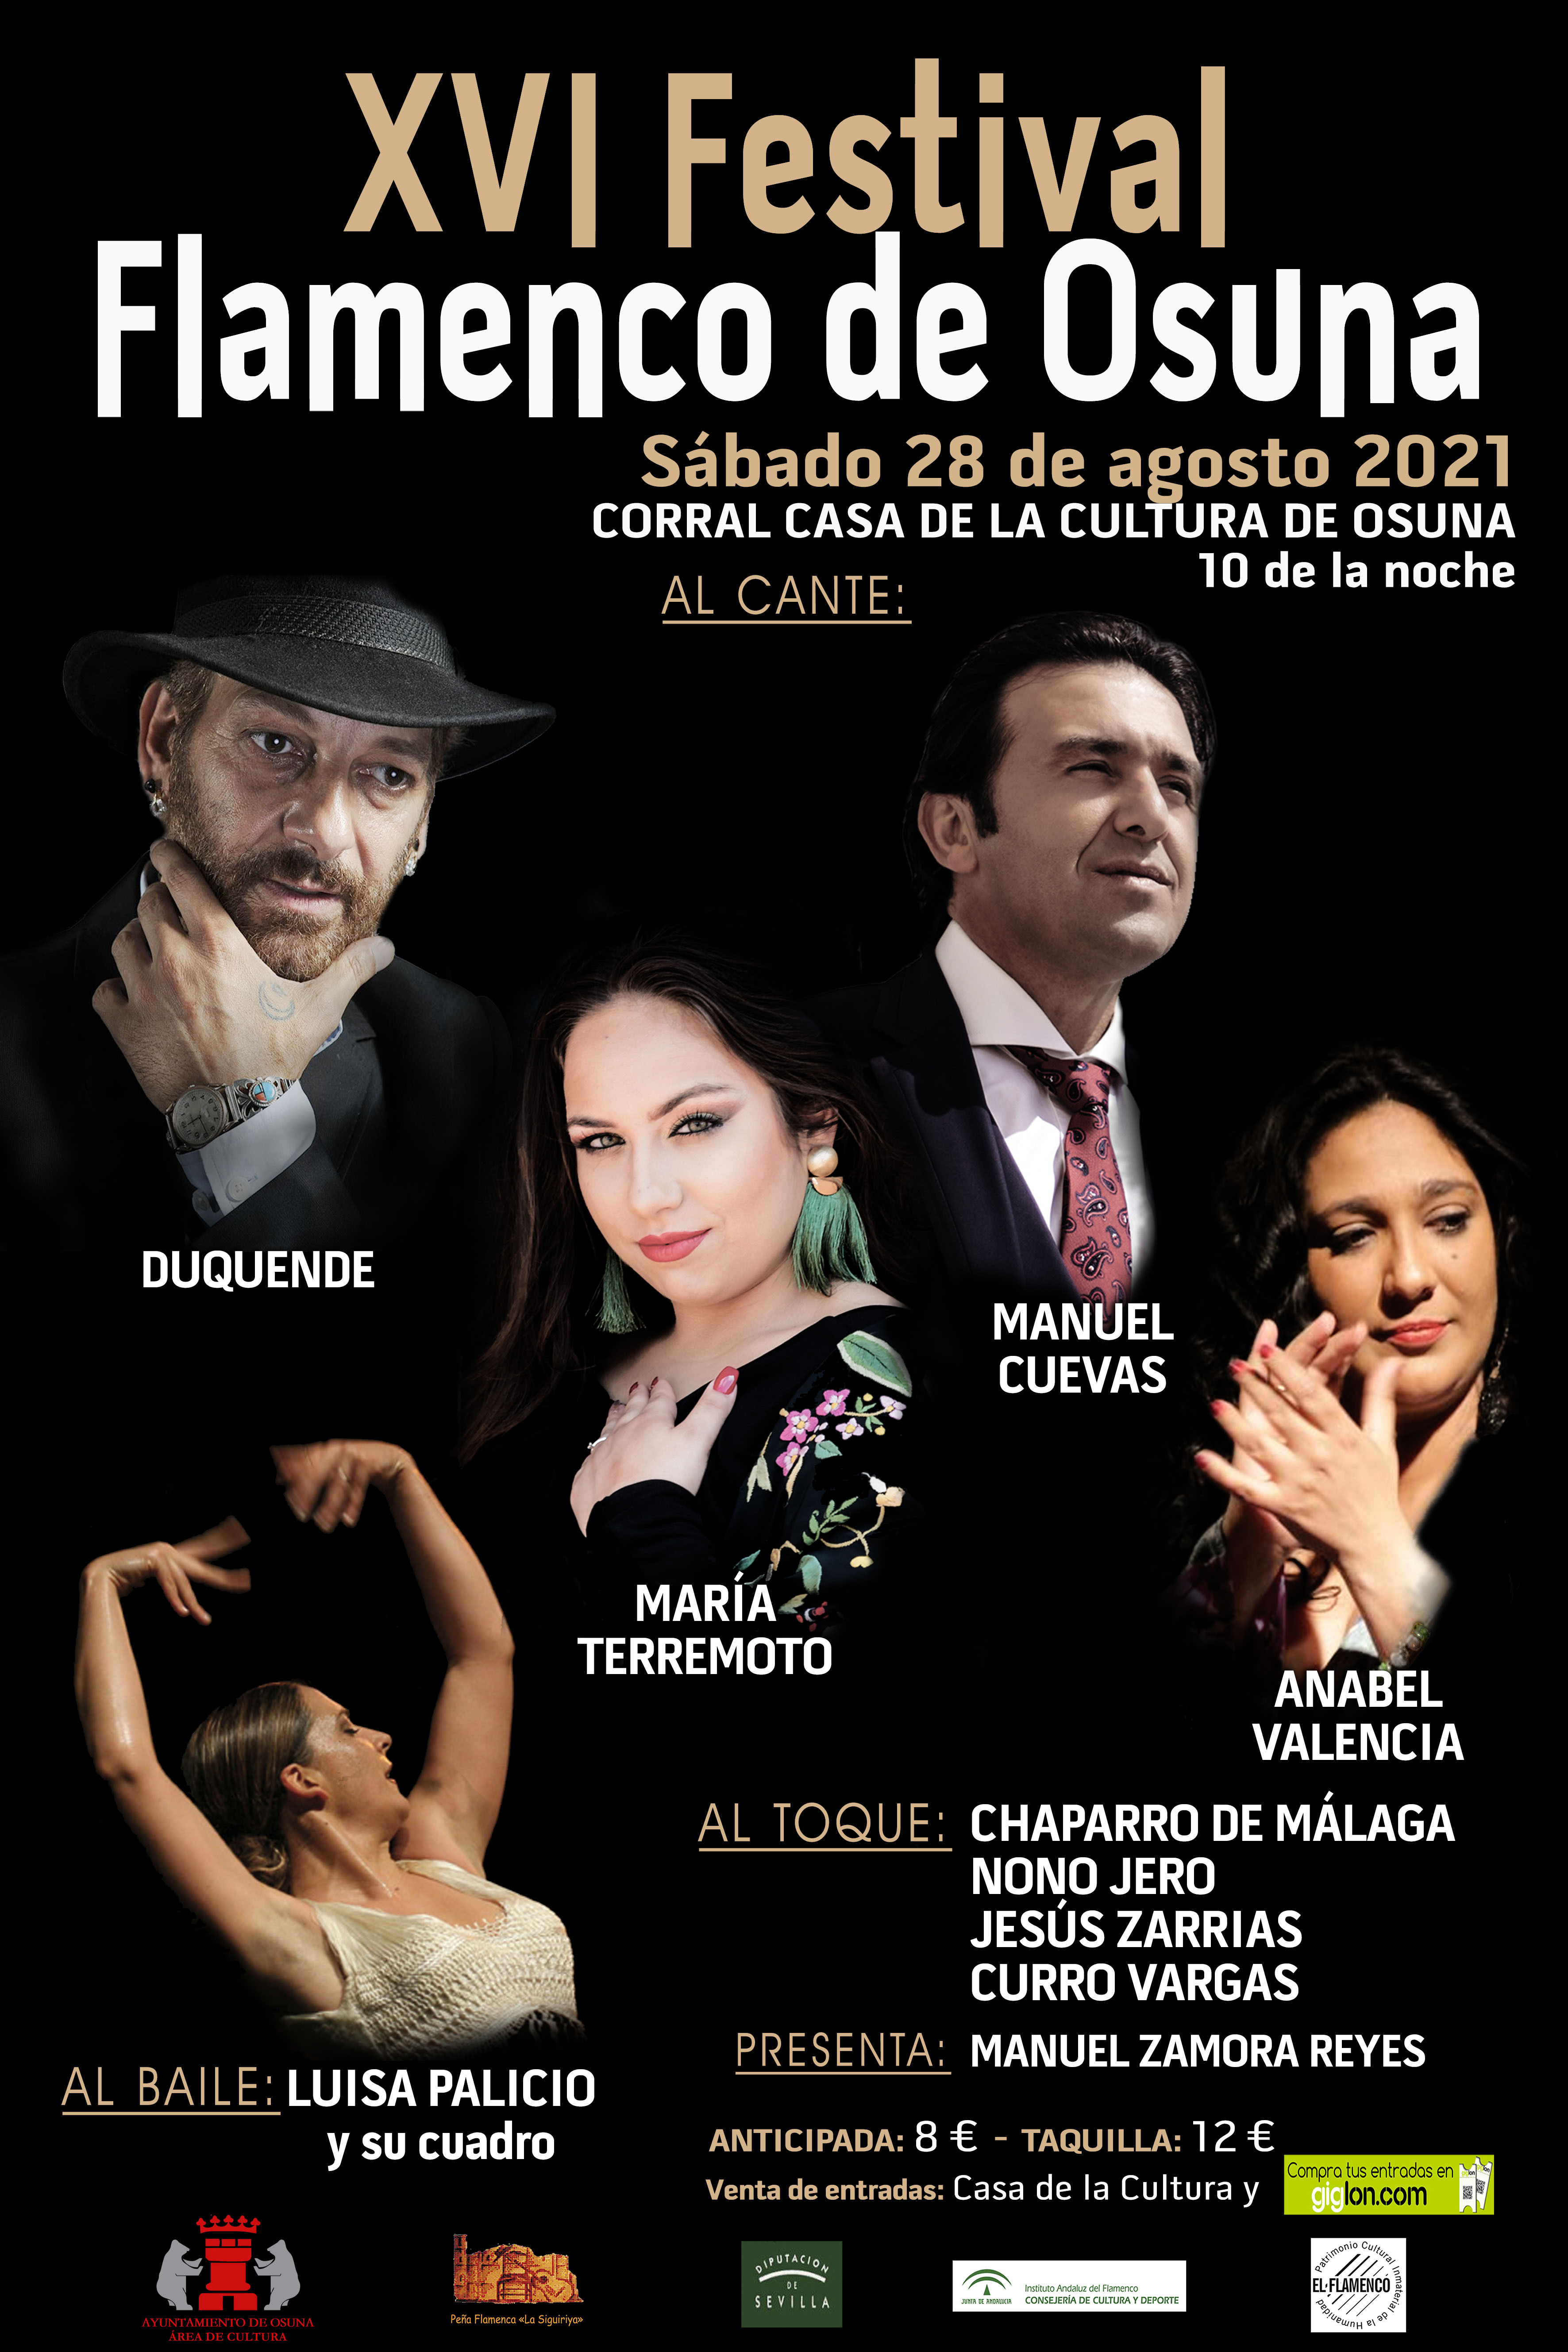 xvi festival flamenco de osuna